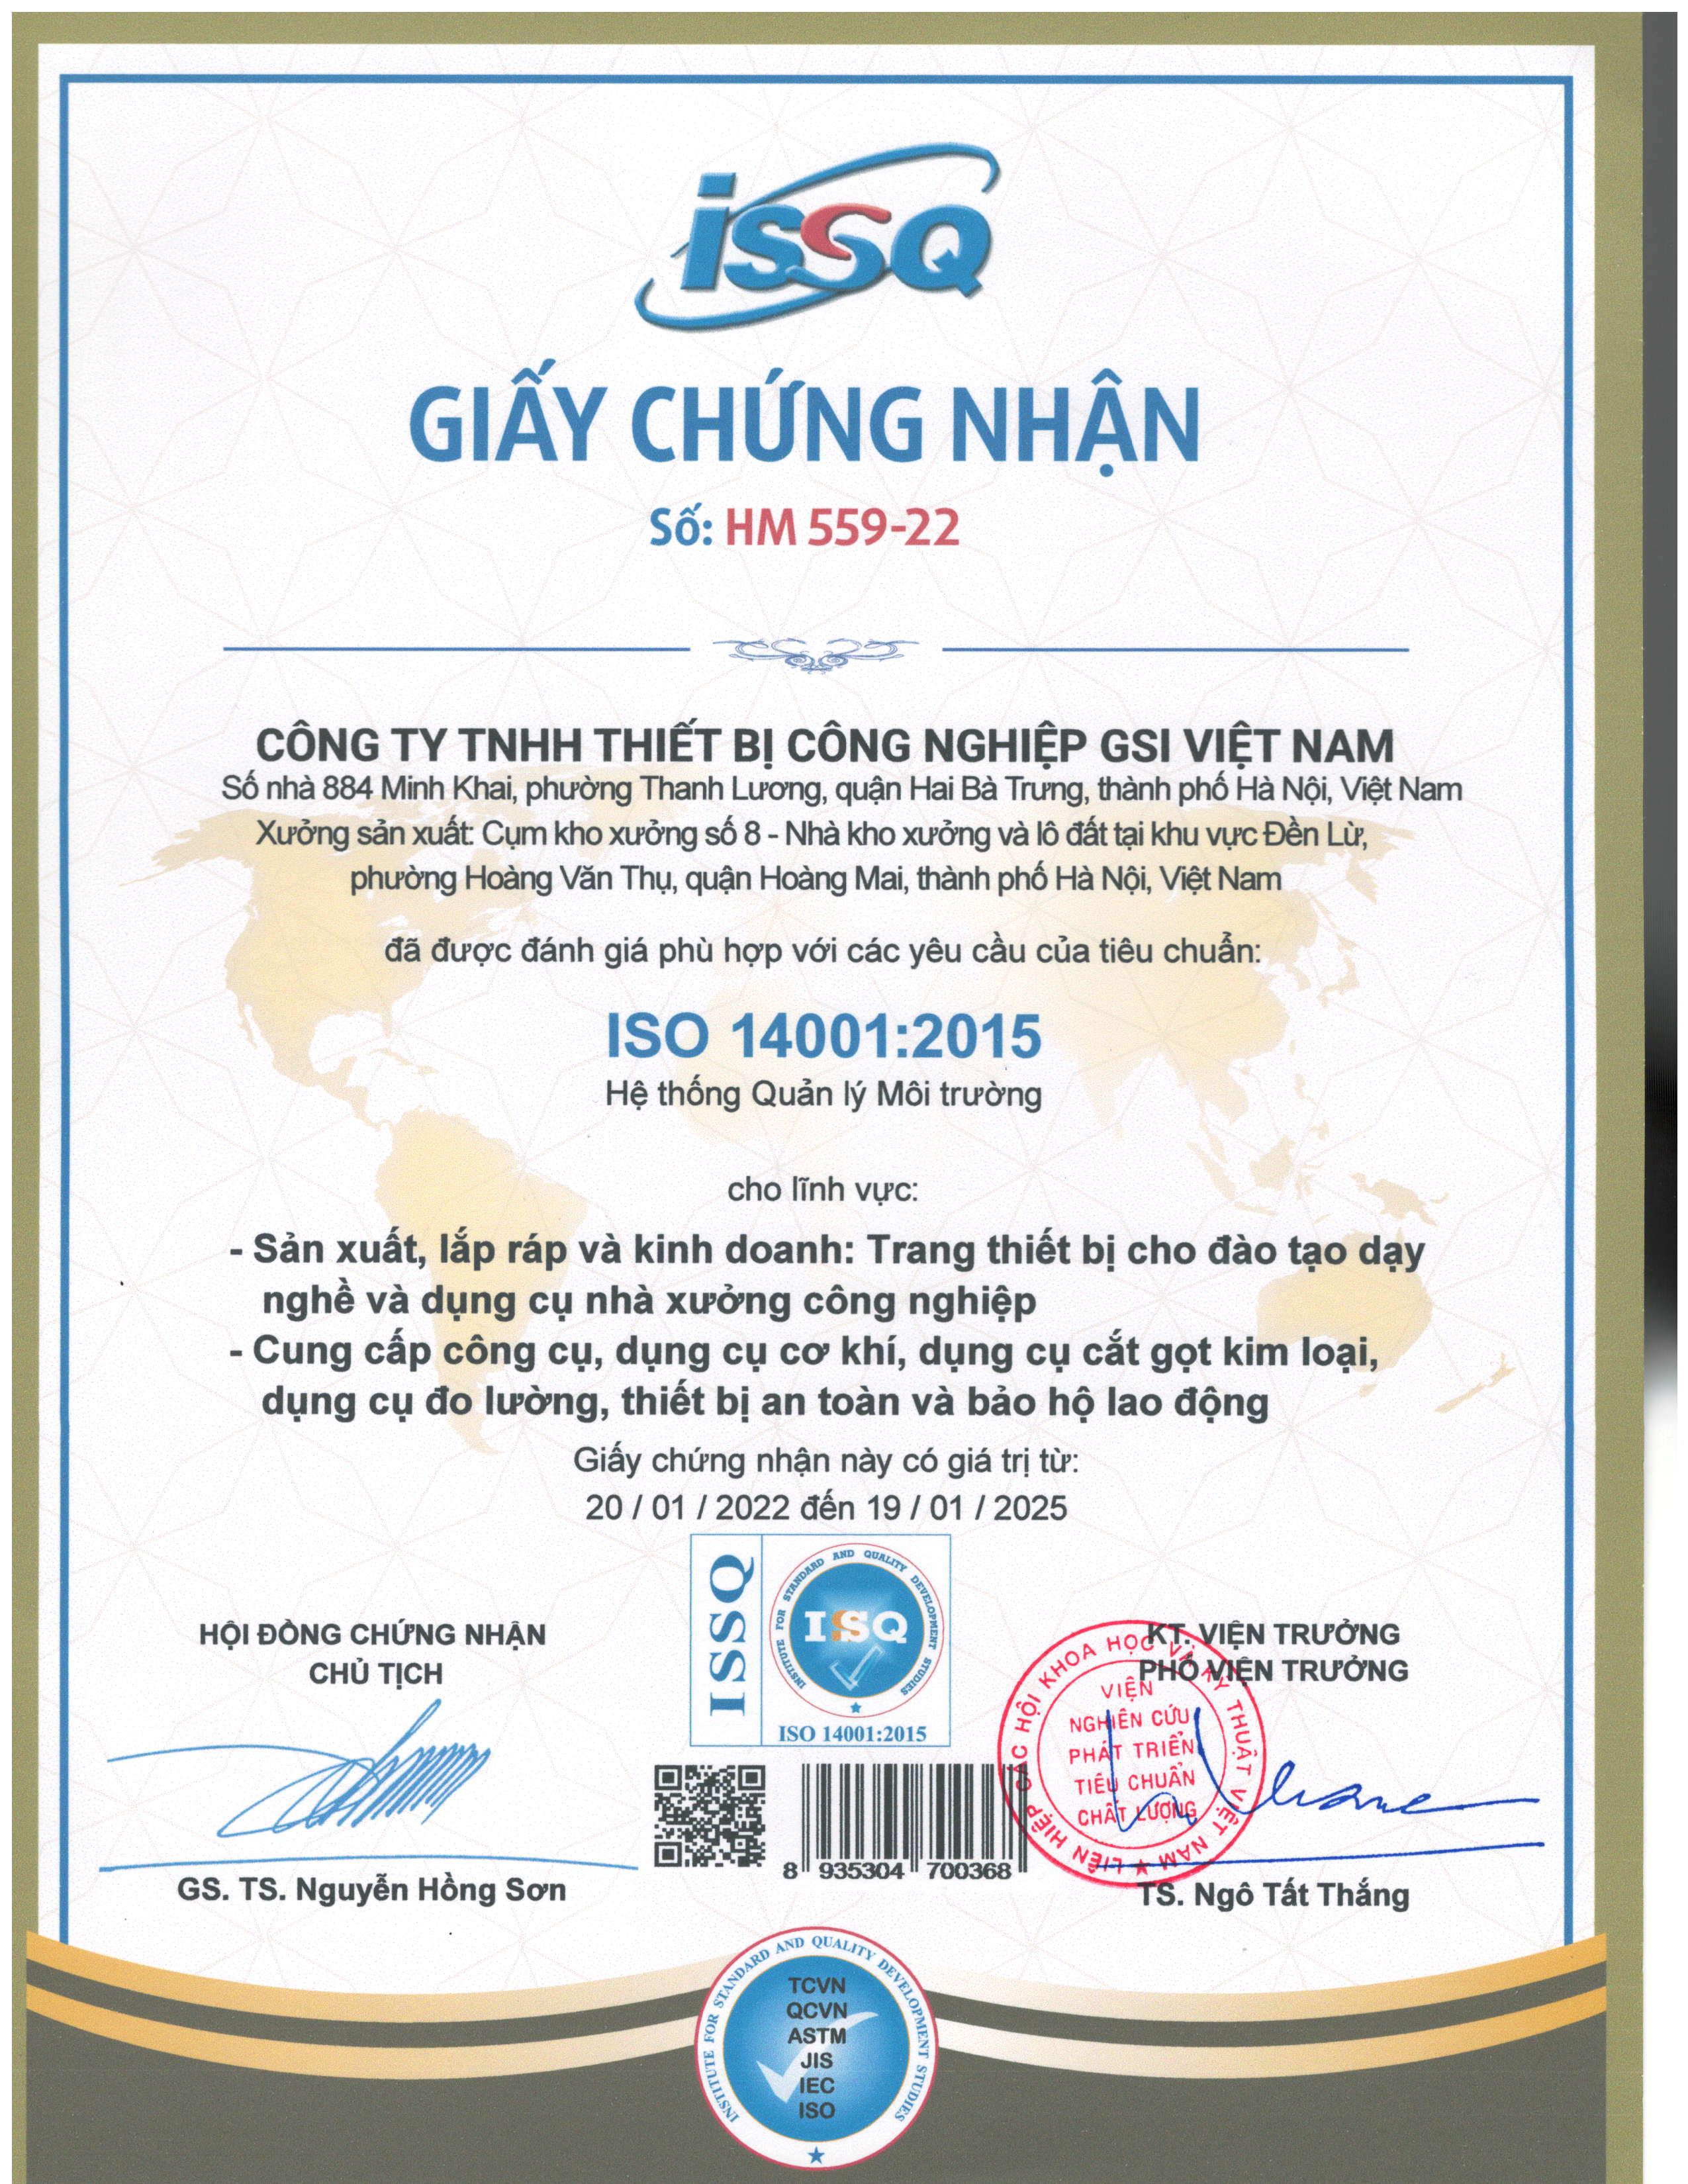 gsitools-nhan-giay-chung-nhan14001.2015